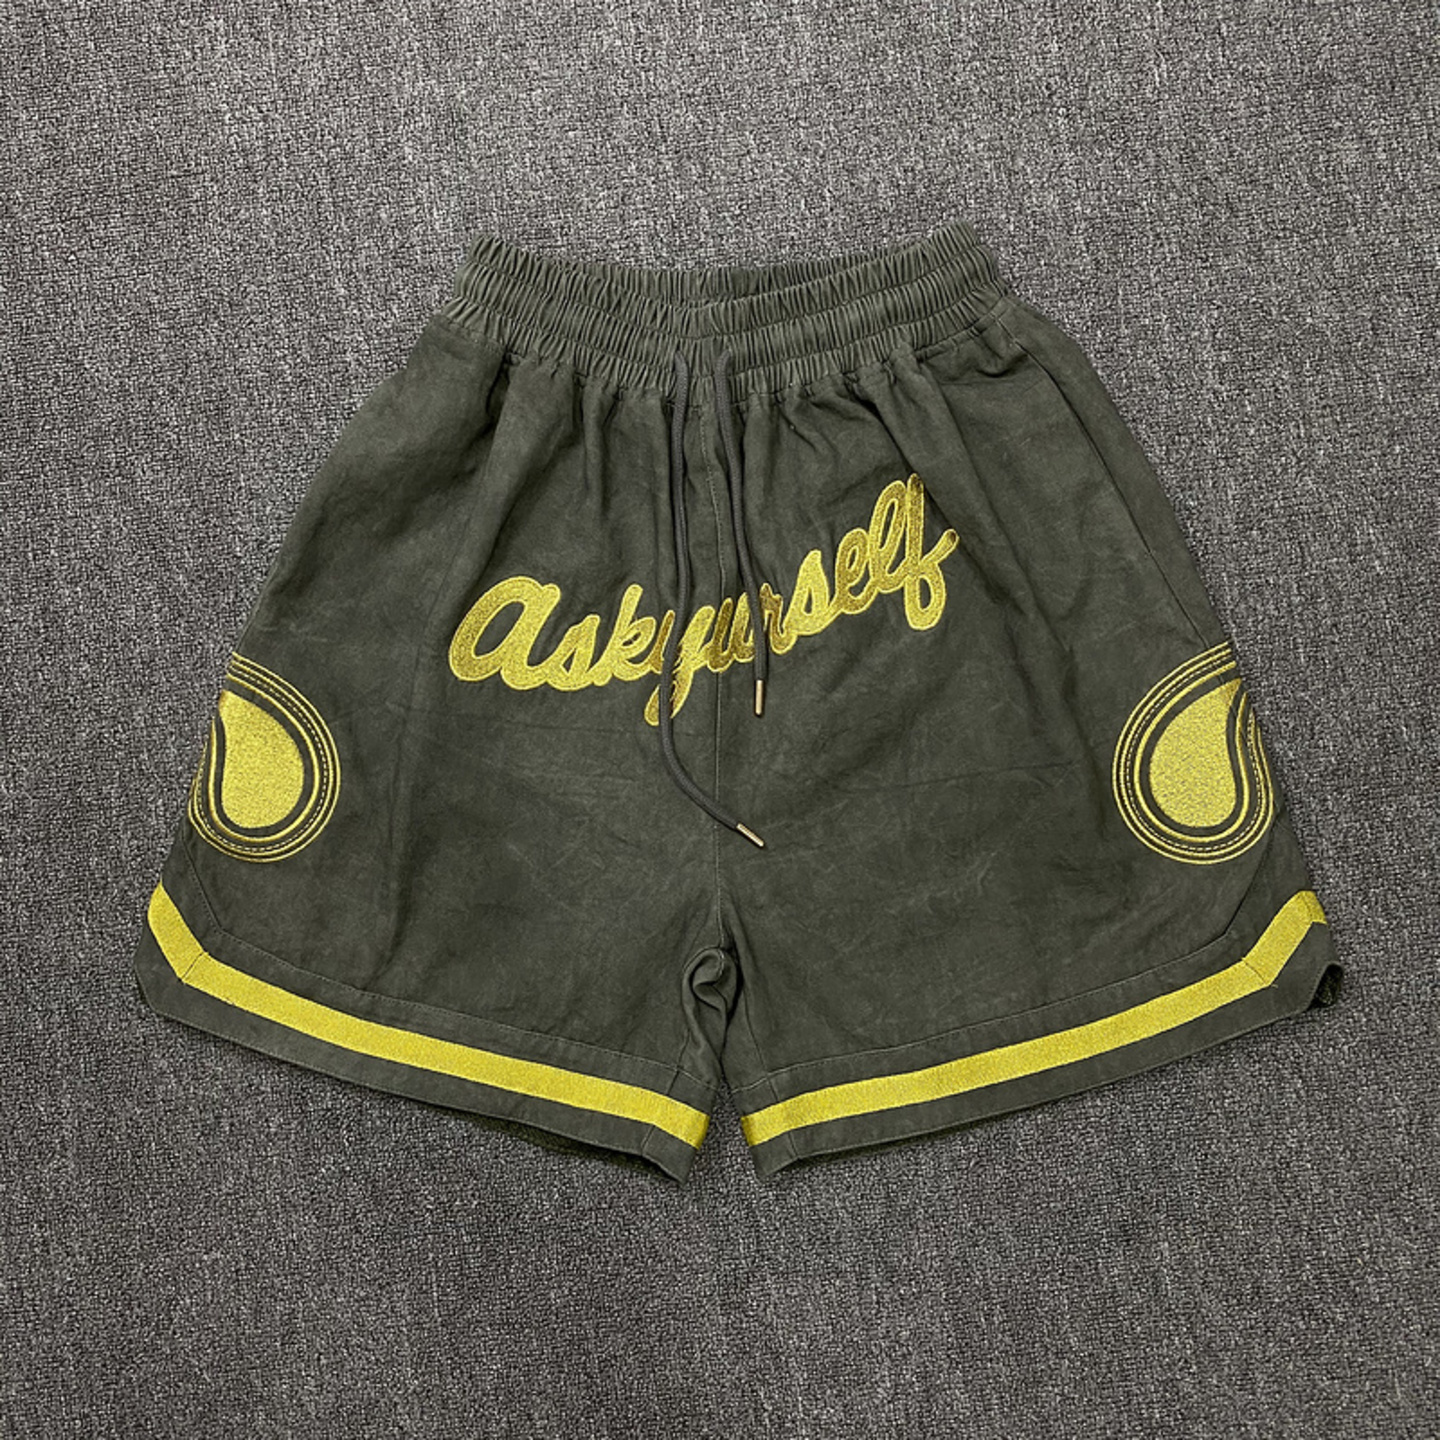  Askyurself Army Project 90S basketball shorts